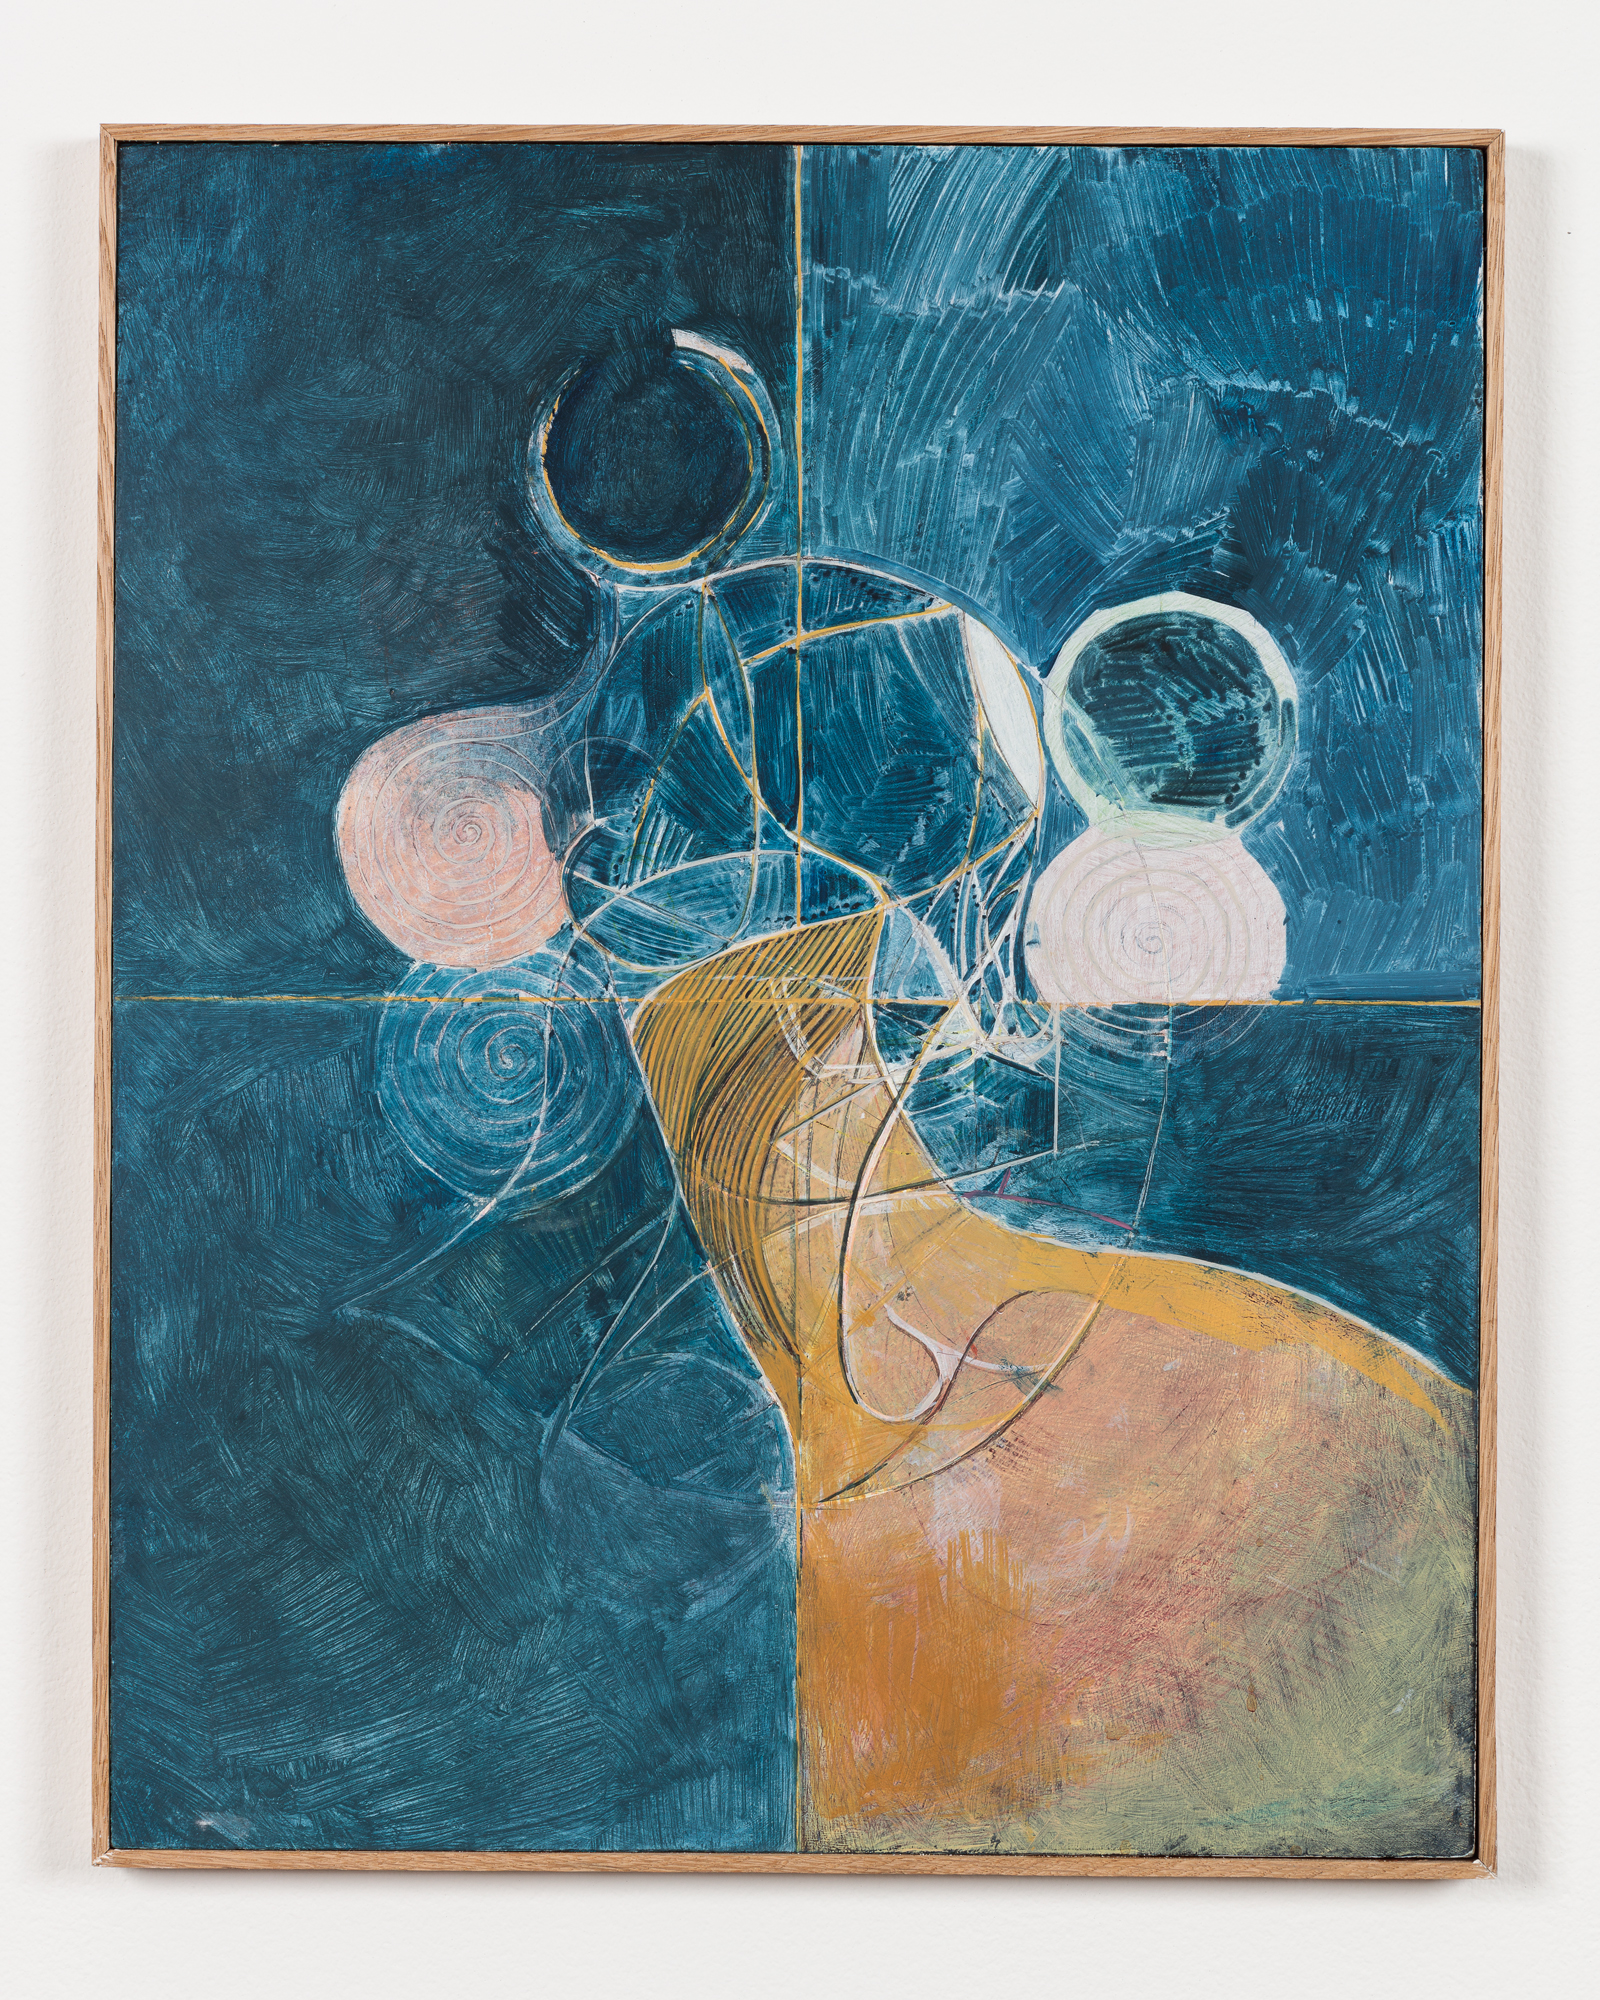 Nicholas Byrne, Clock face and curls, 2015, oil on gessoed panel with artists frame, 50 x 40 x 2 cm, 19 3/4 x 15 3/4 x 3/4 ins. Nicholas Byrne